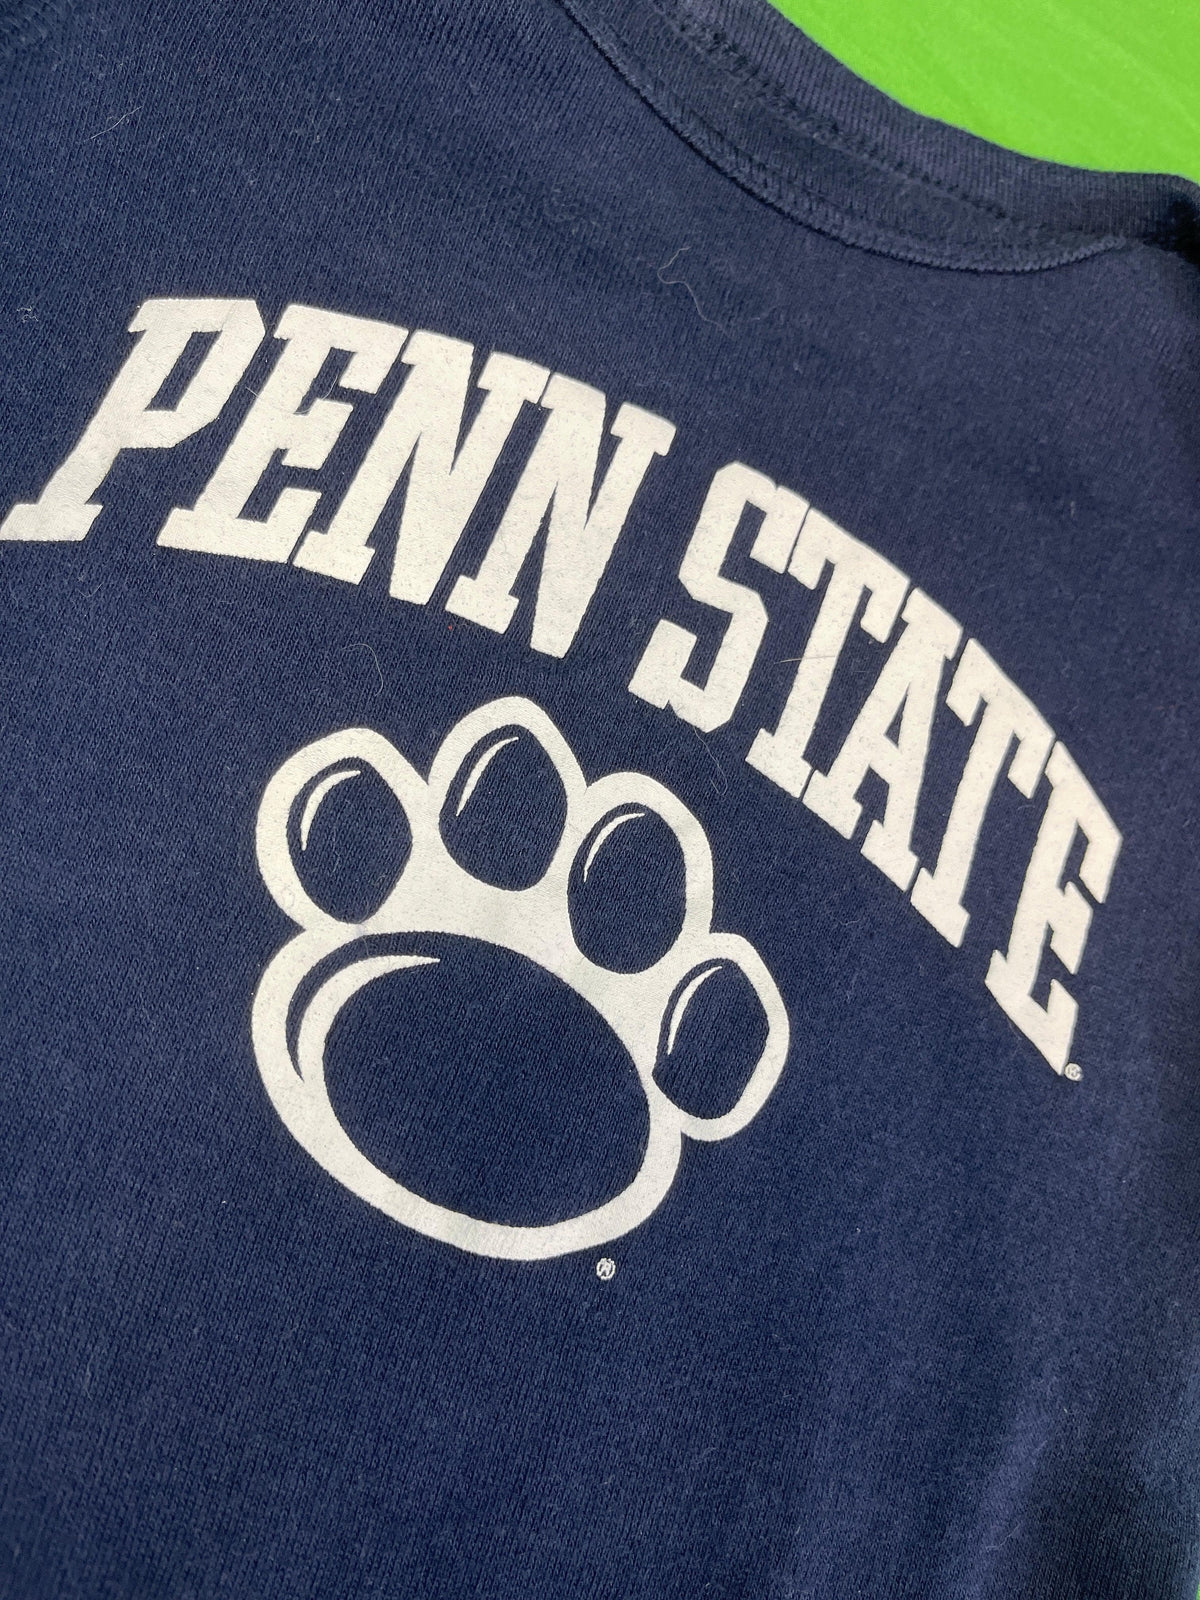 NCAA Penn State Nittany Lions Dark Blue Bodysuit 12 months